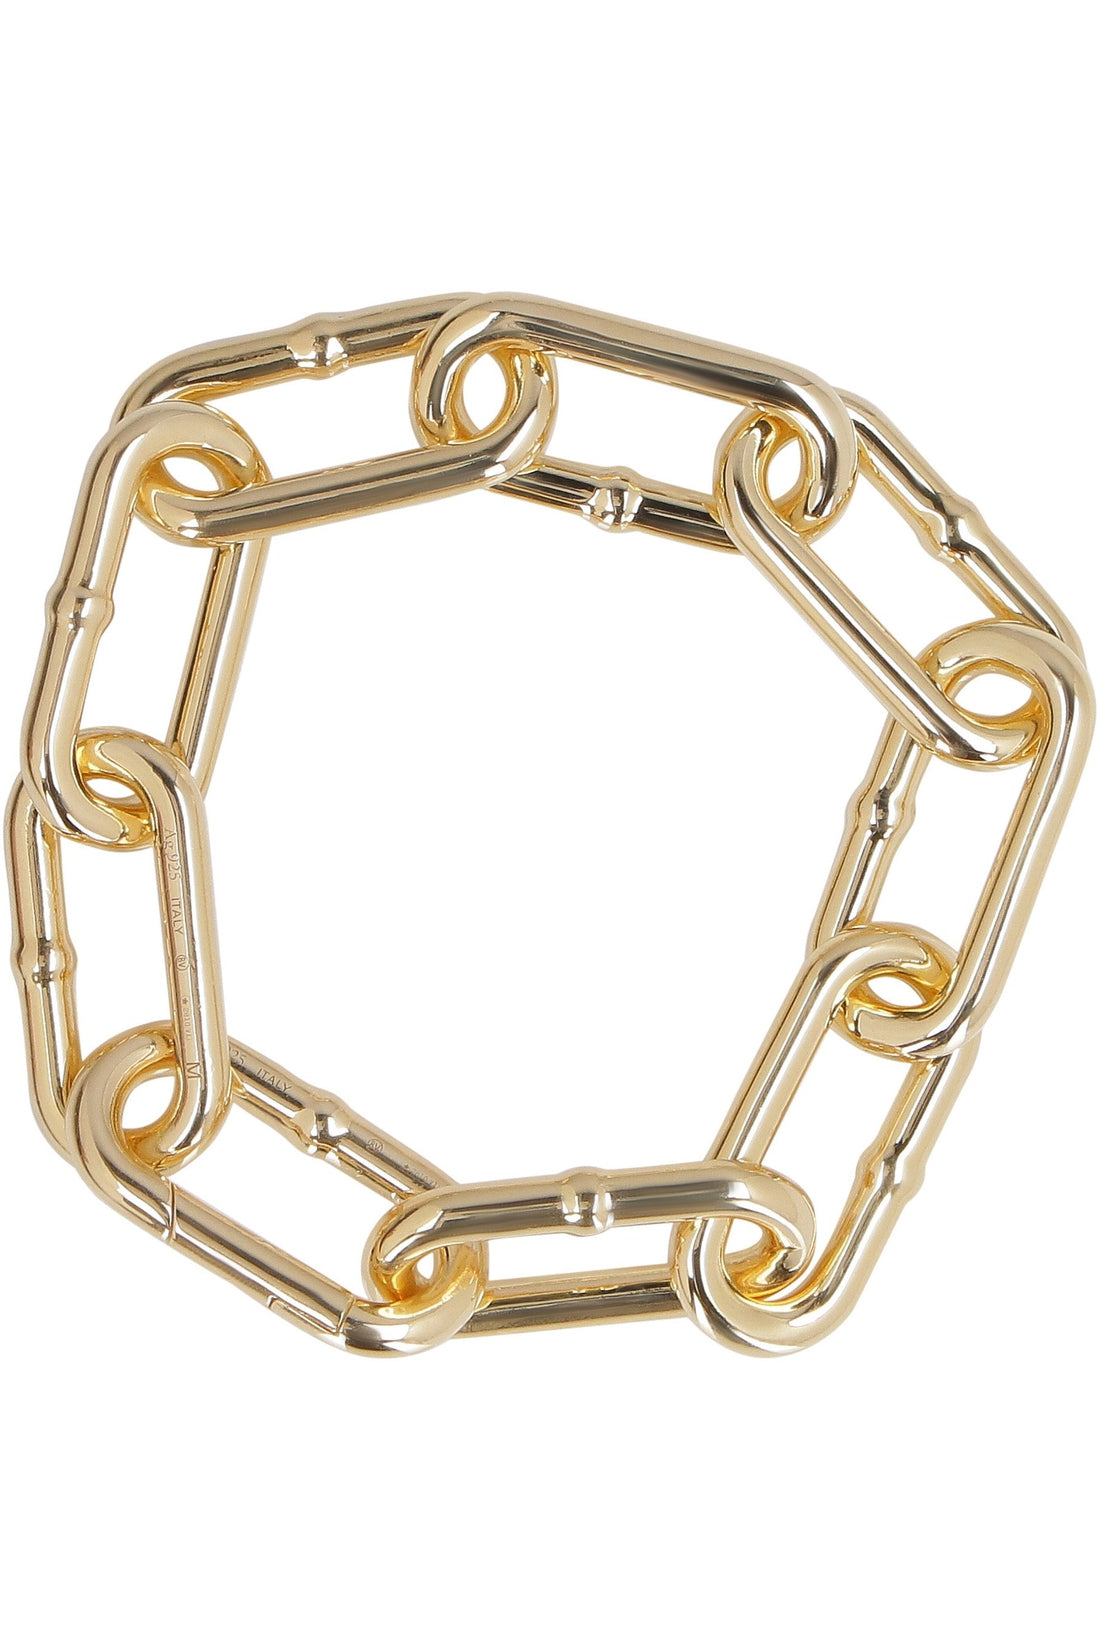 Bottega Veneta-OUTLET-SALE-Plated silver chain bracelet-ARCHIVIST